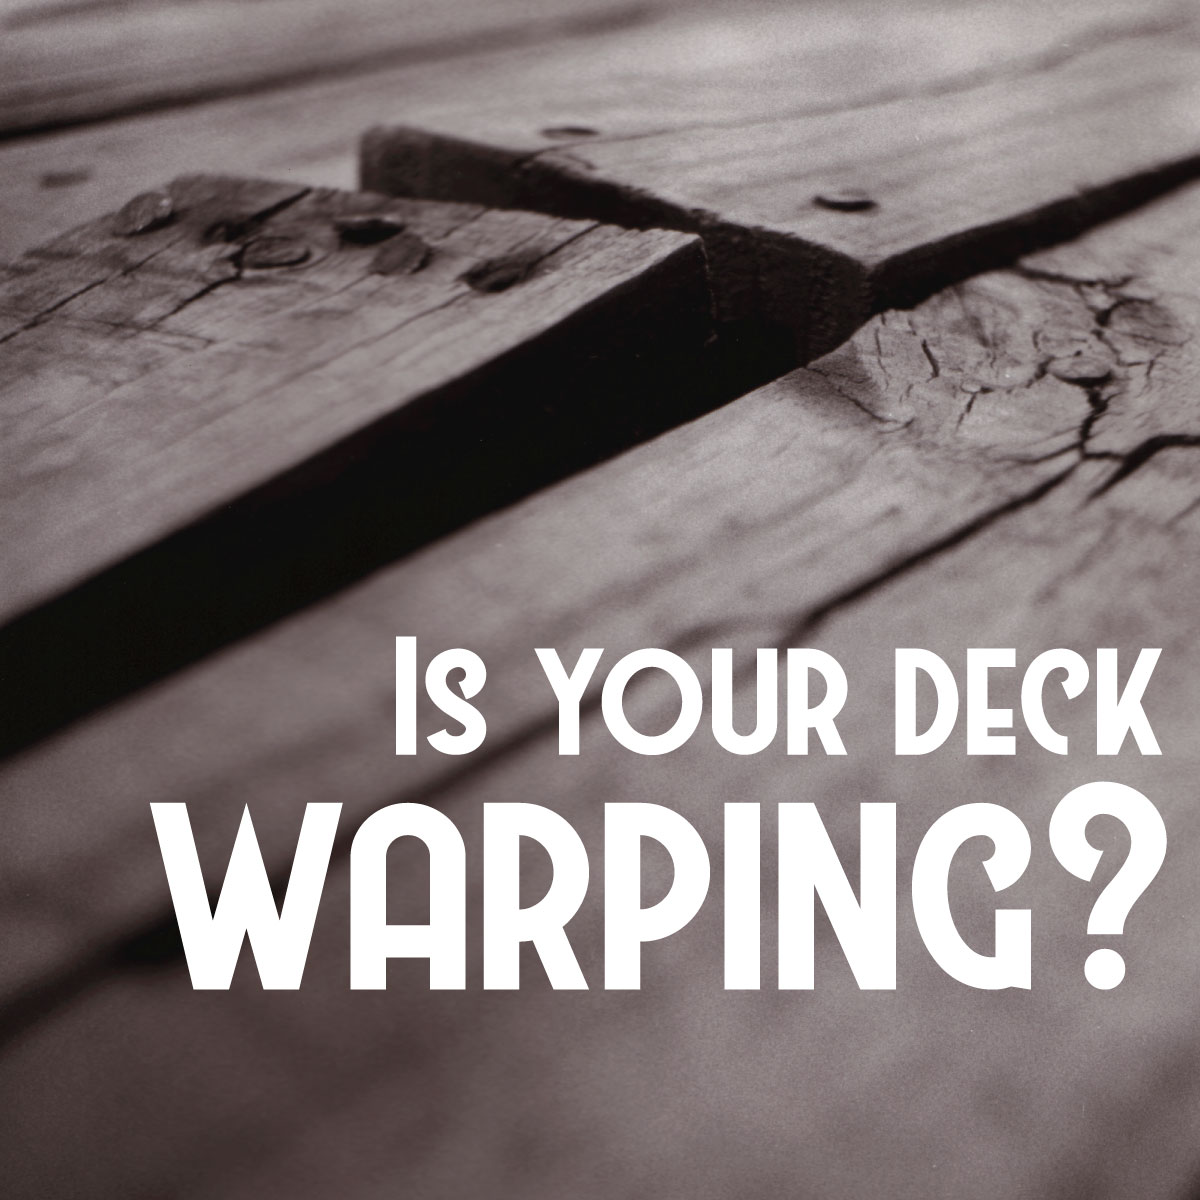 warping deck boards